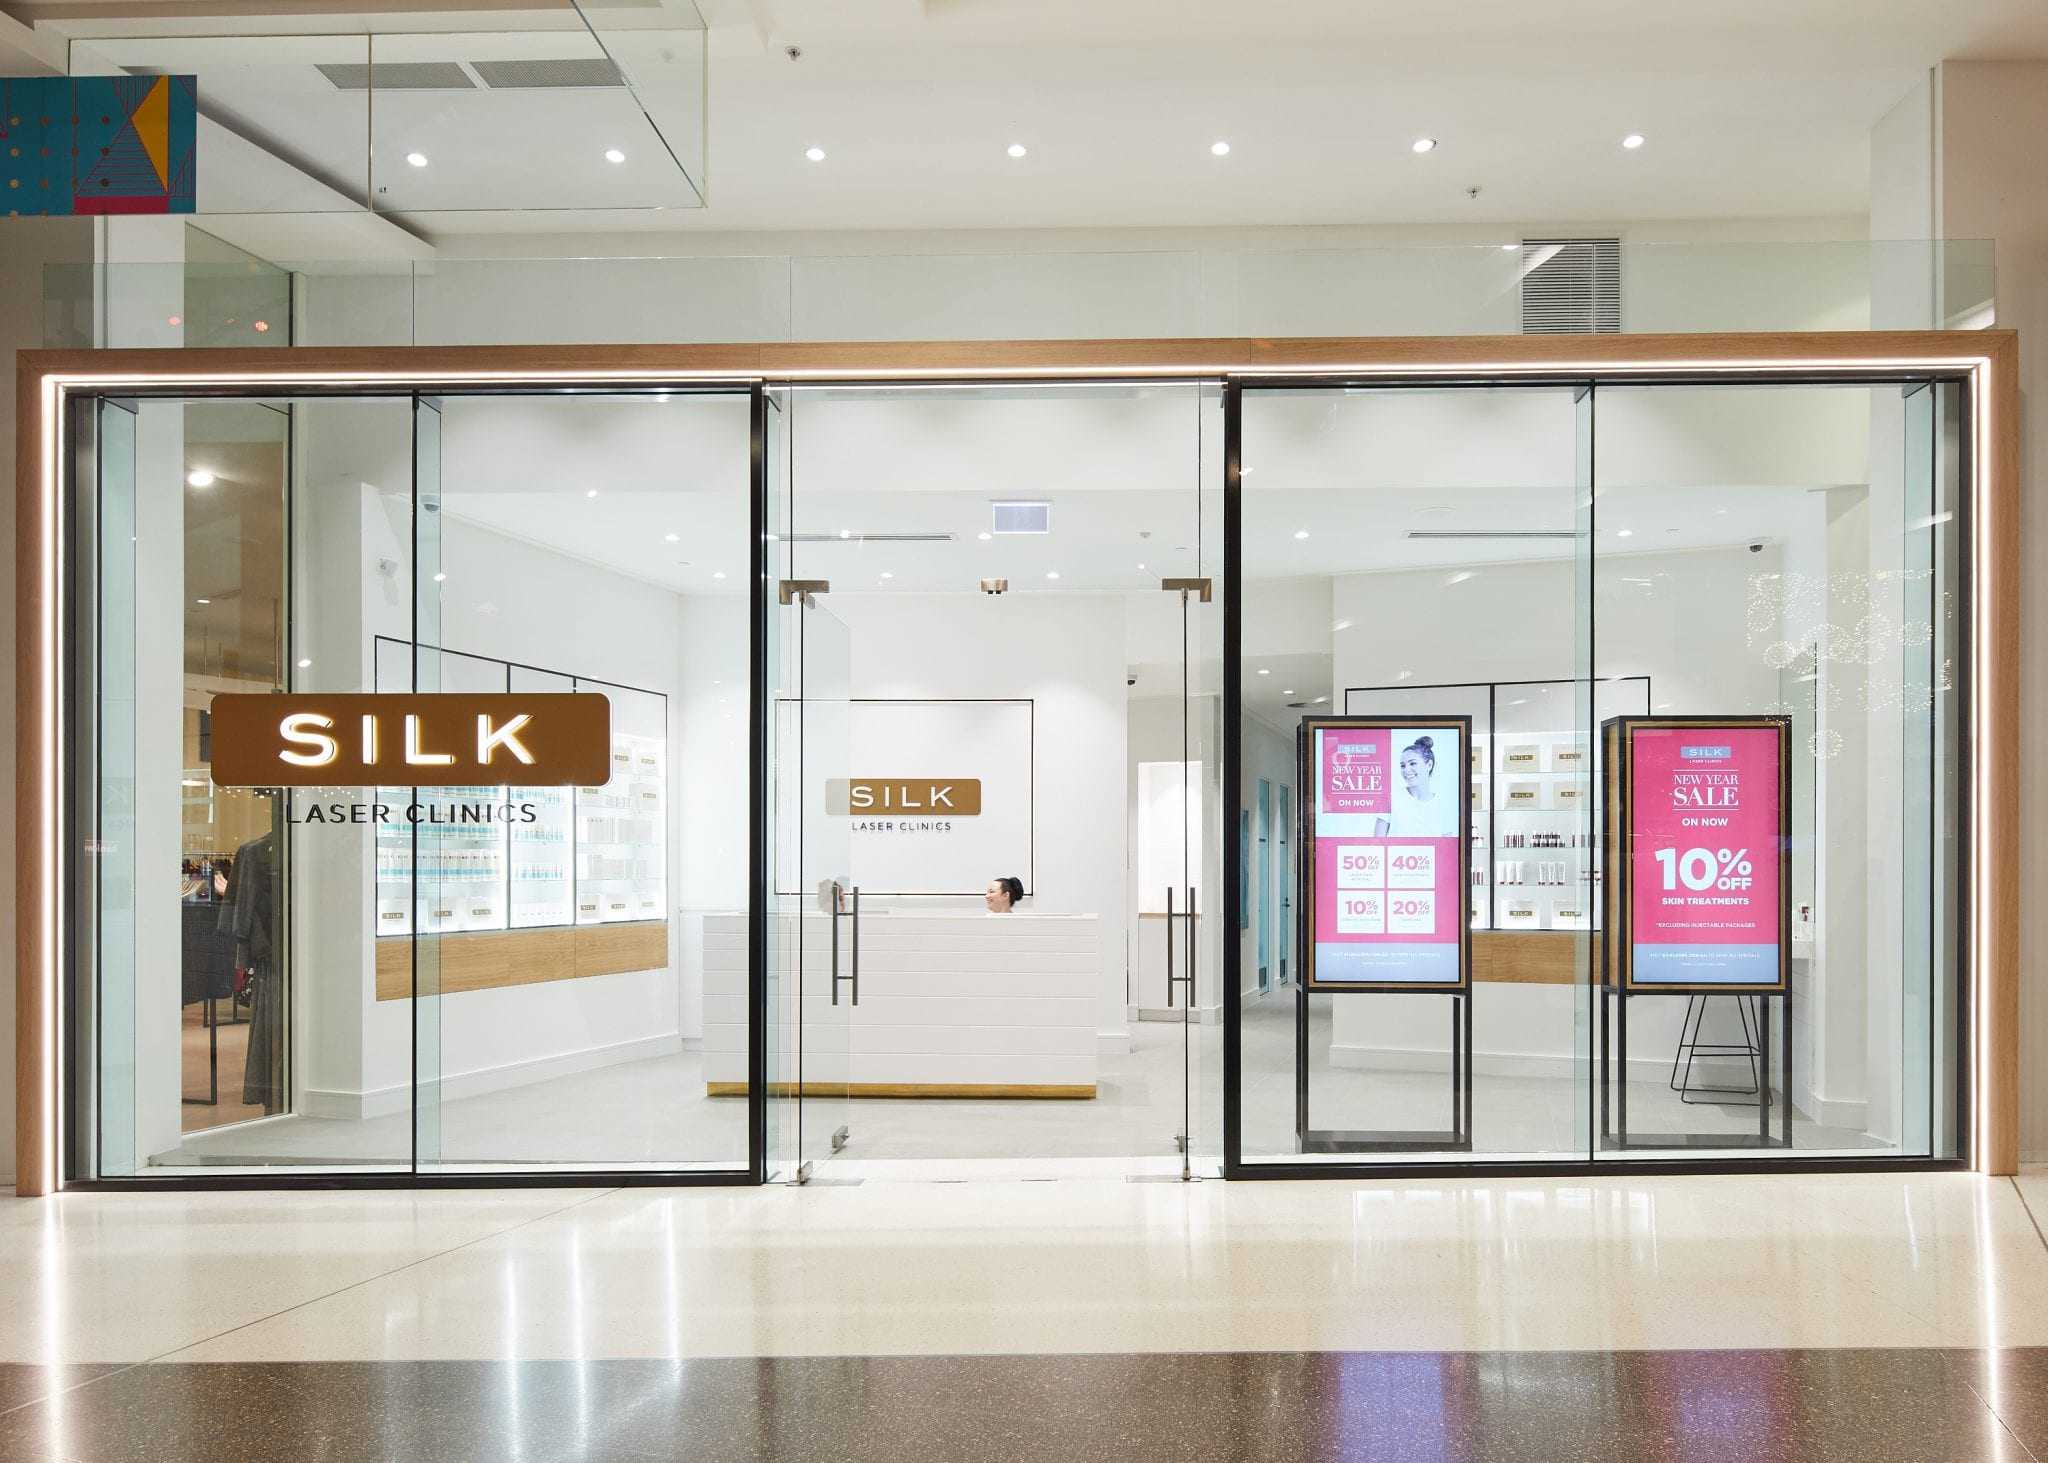 Silk-Laser-Clinics-Perth